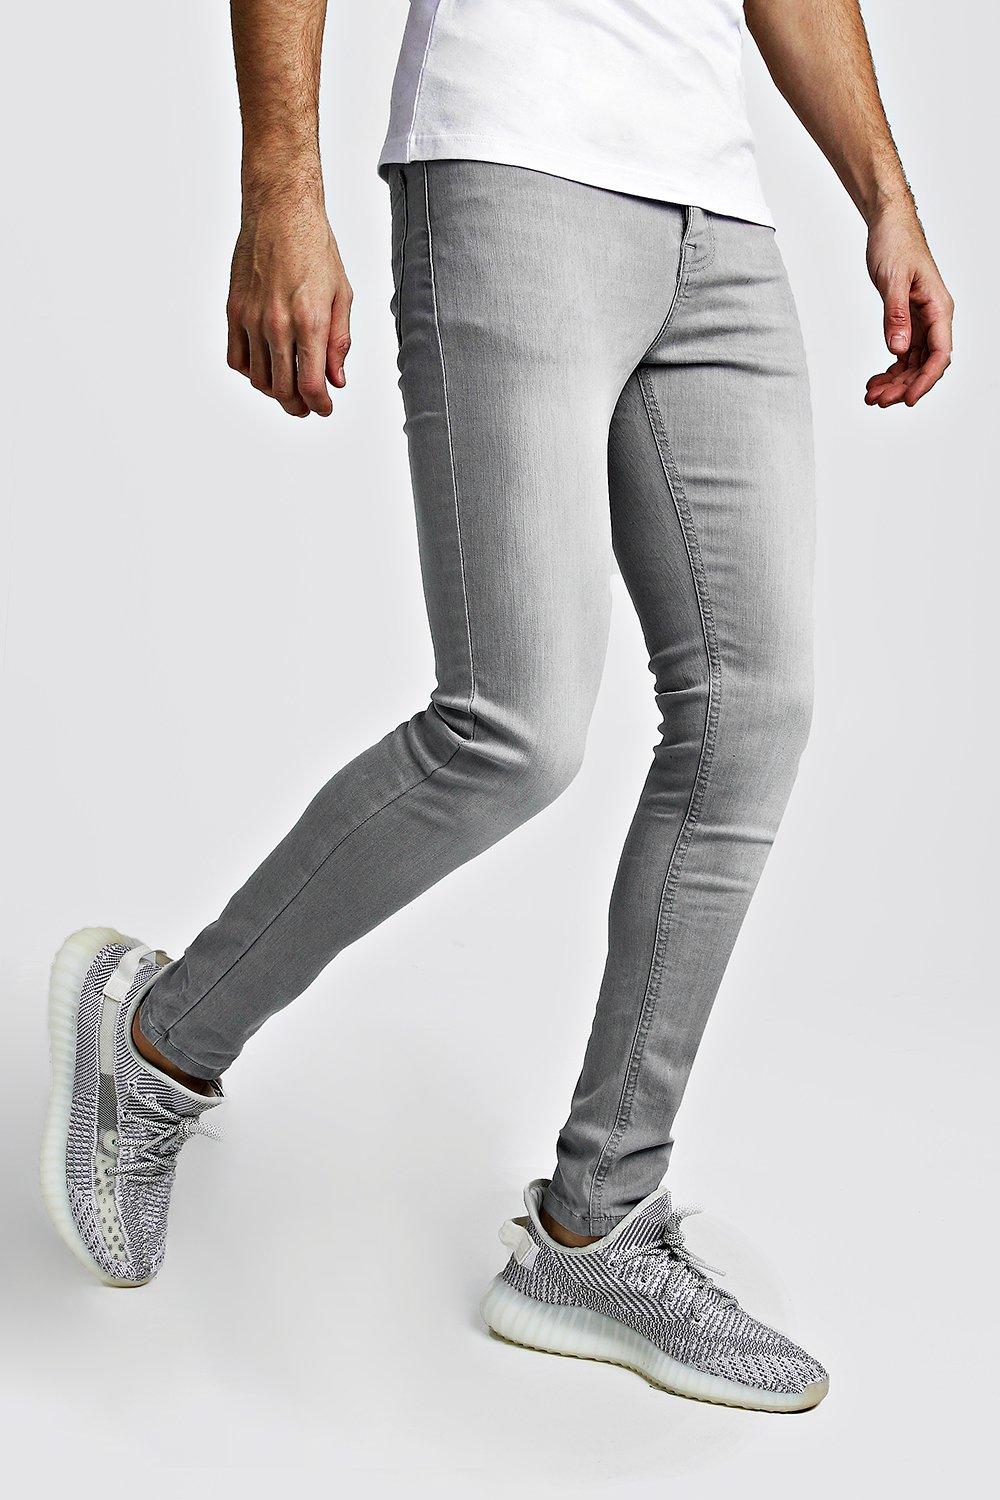 grey slim jeans mens